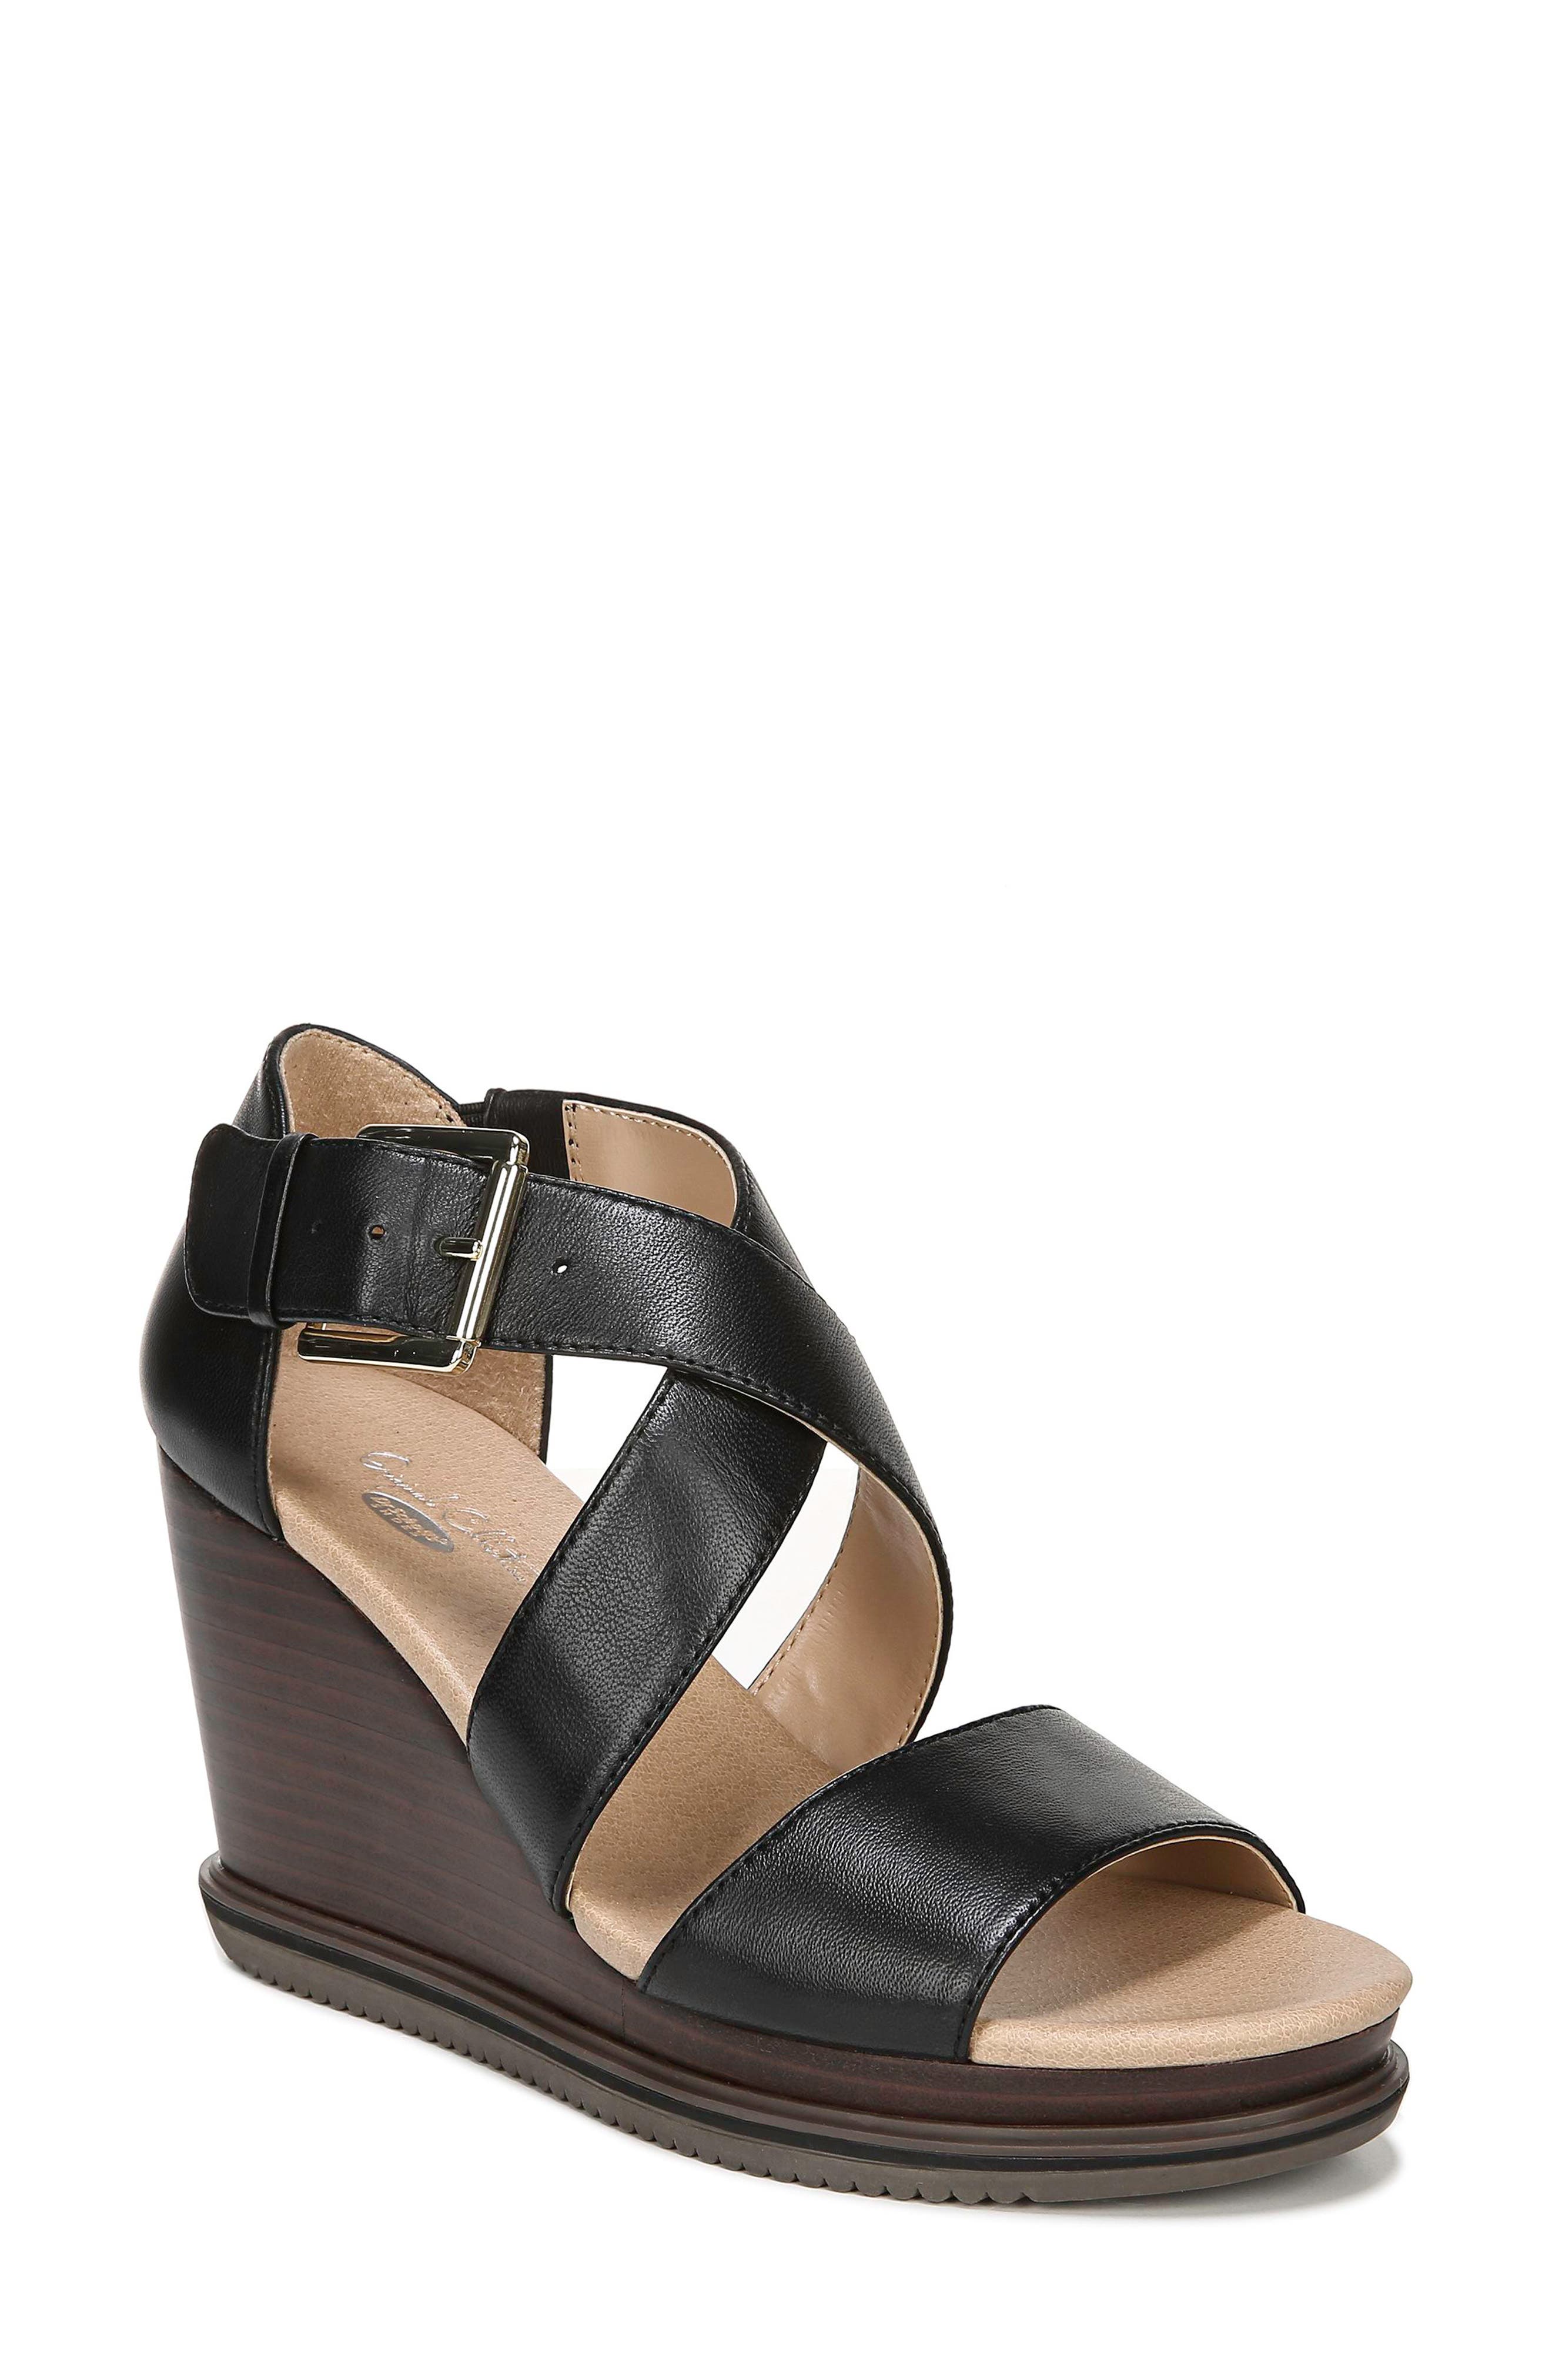 UPC 742976000119 product image for Women's Dr. Scholl's Sweet Escape Wedge Sandal, Size 9.5 M - Black | upcitemdb.com